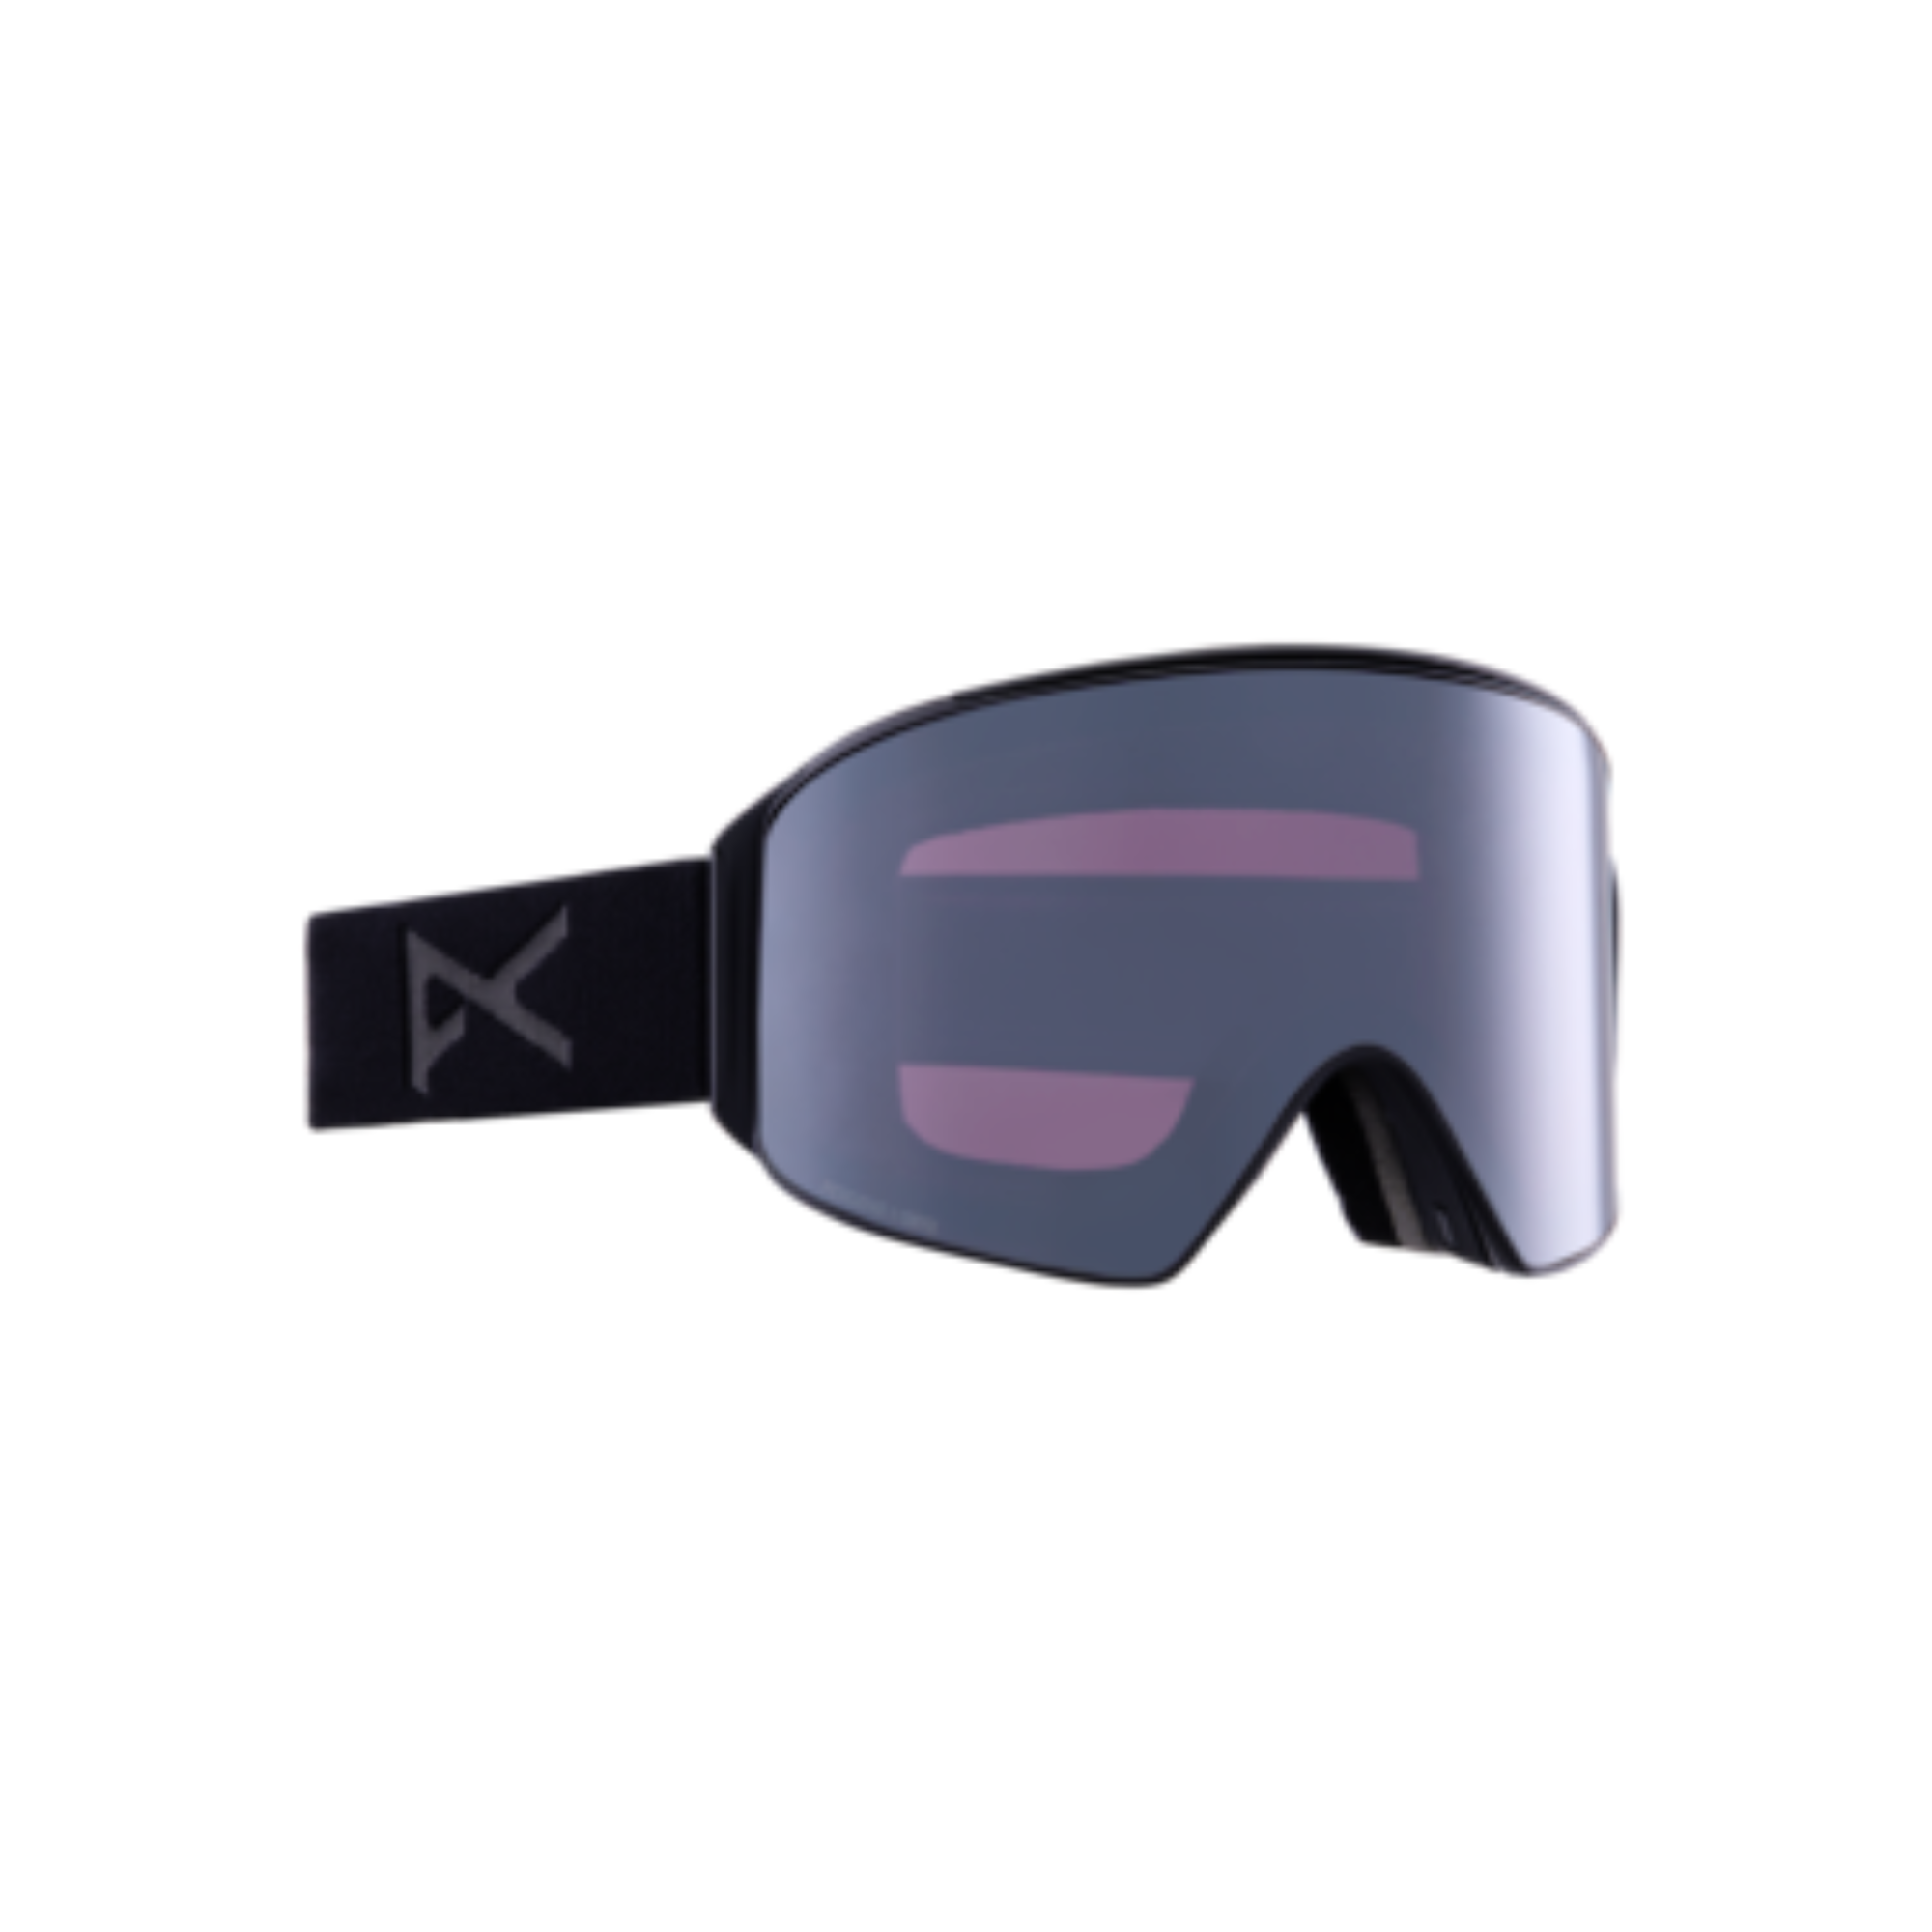 Anon M4 Cylindrical Goggles + Bonus Lens + MFI® Face Mask - Low Bridge Fit - Smoke / Percieve Sunny Onyx